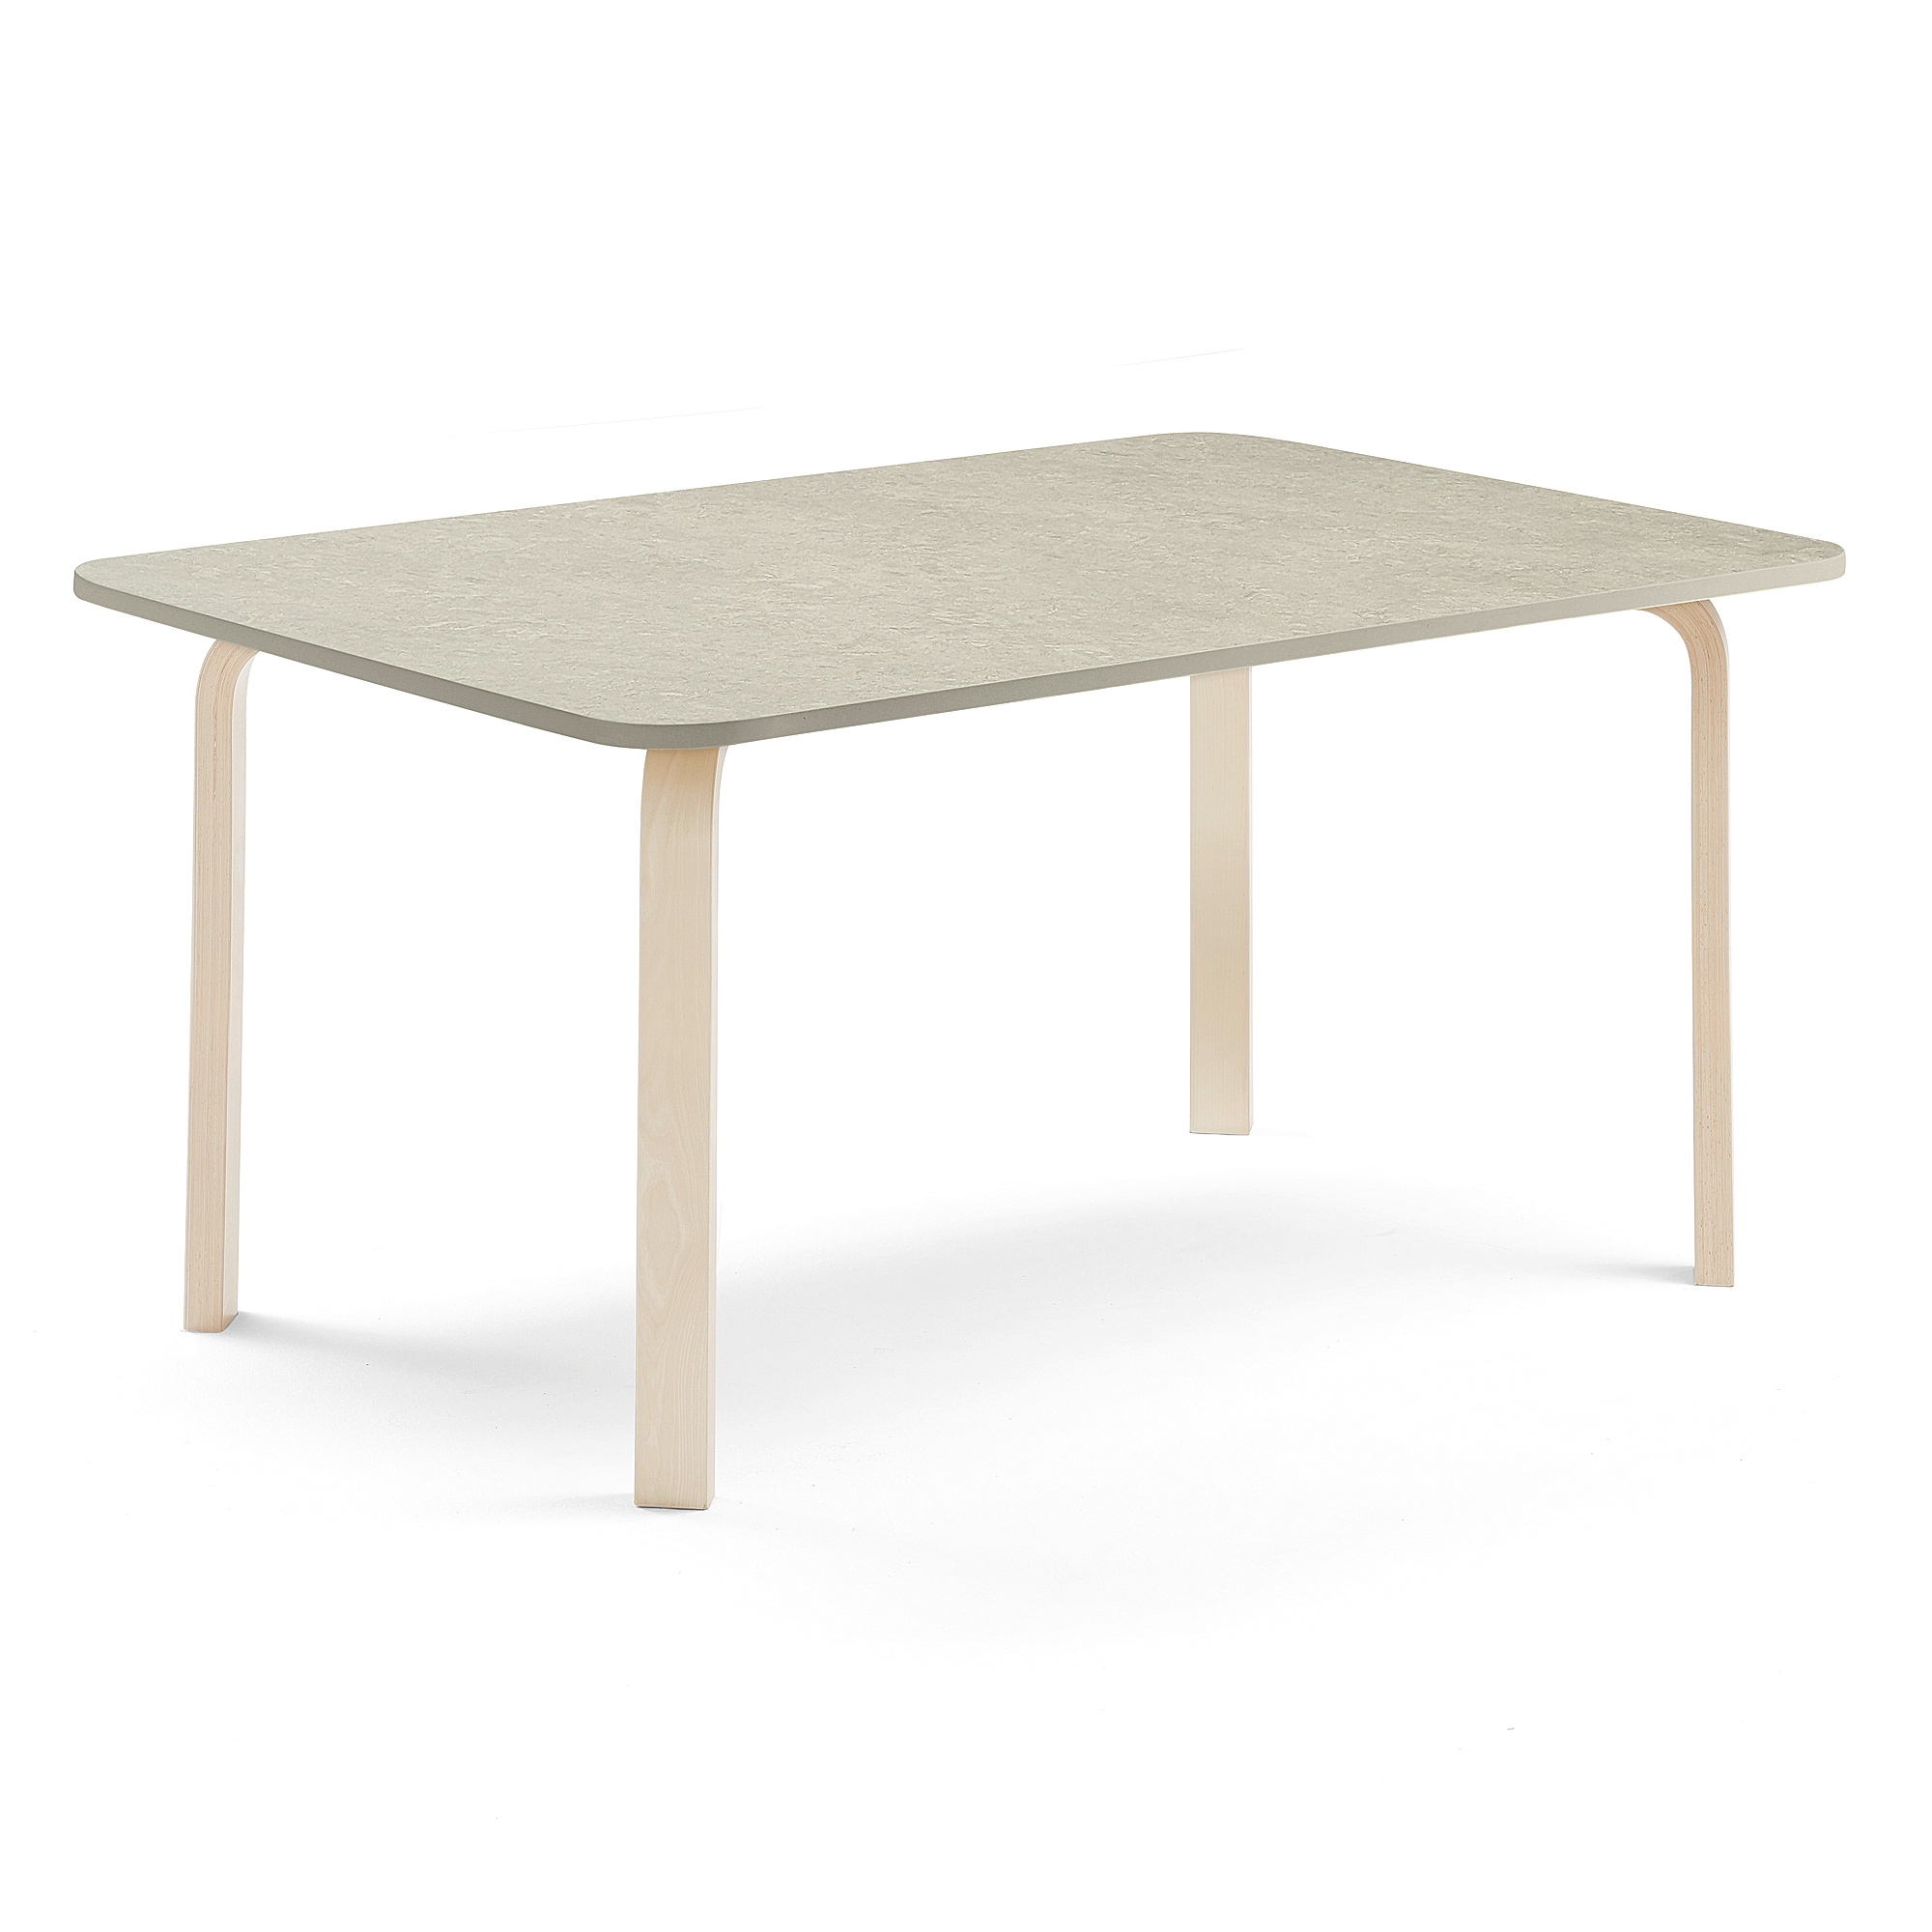 Stůl ELTON, 1800x700x640 mm, bříza, akustické linoleum, šedá